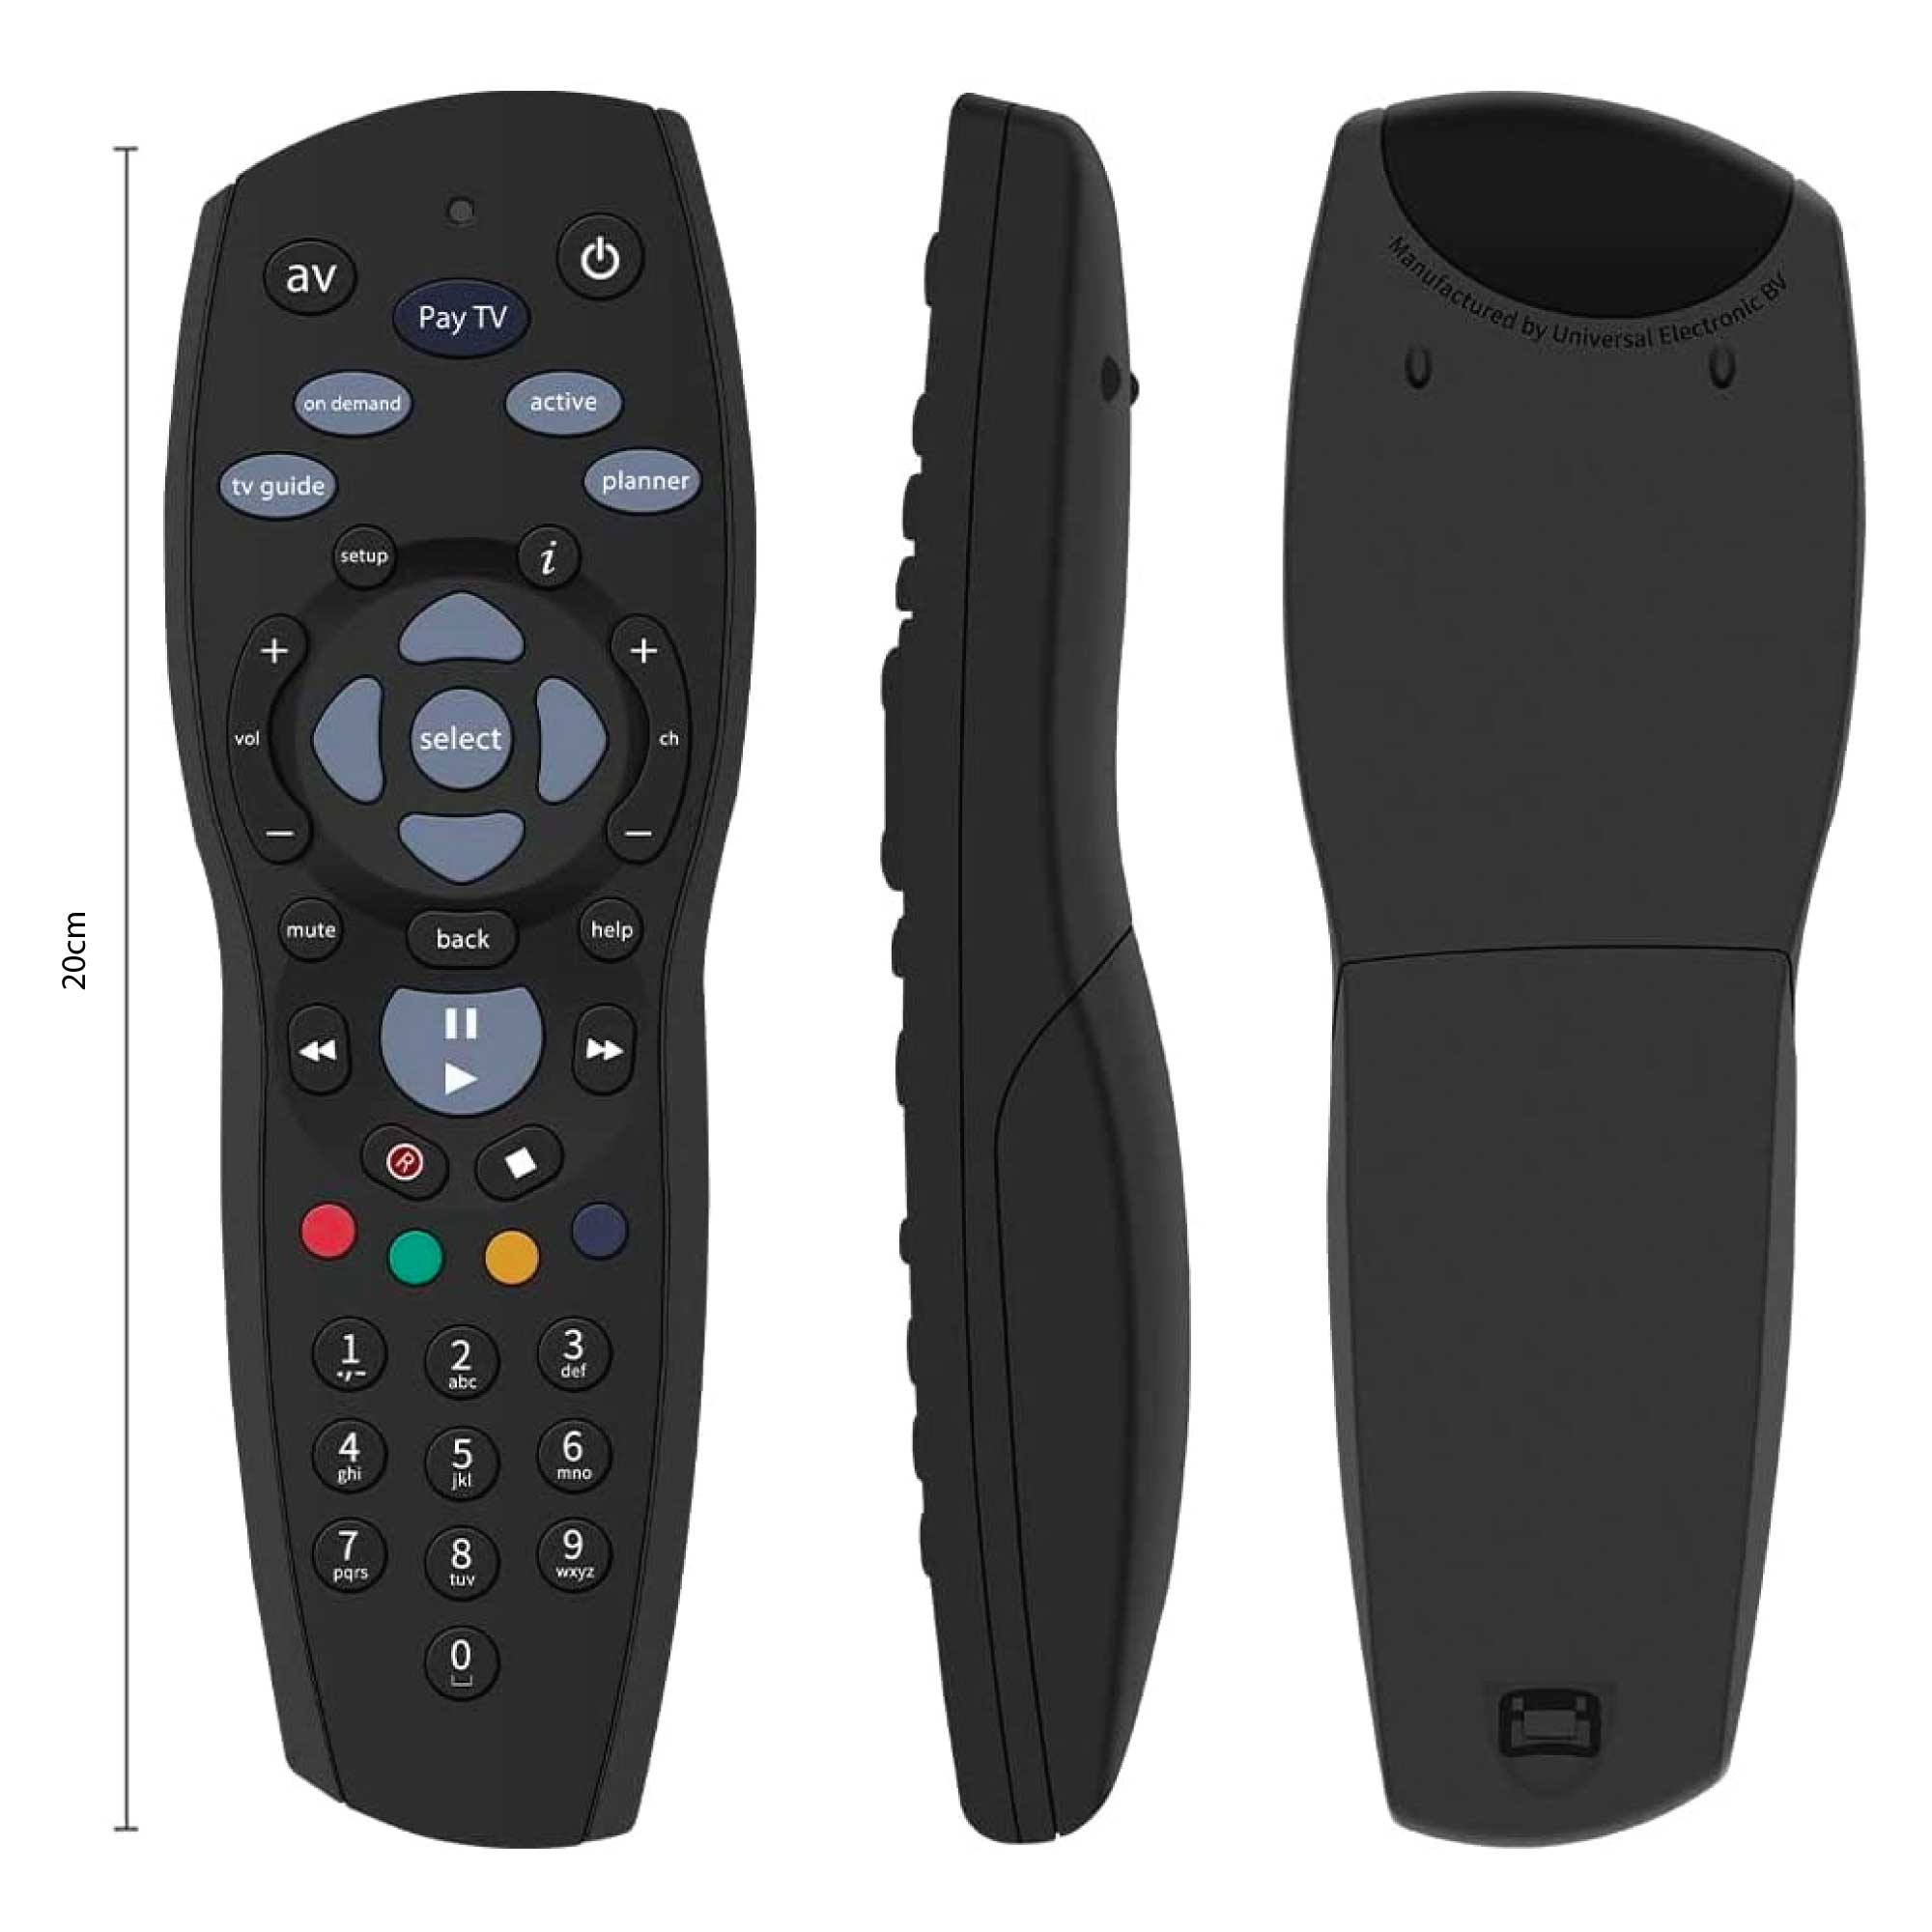 2x Foxtel Remote Control Replacement For FOXTEL MYSTAR SKY NEW ZEALAND - Black